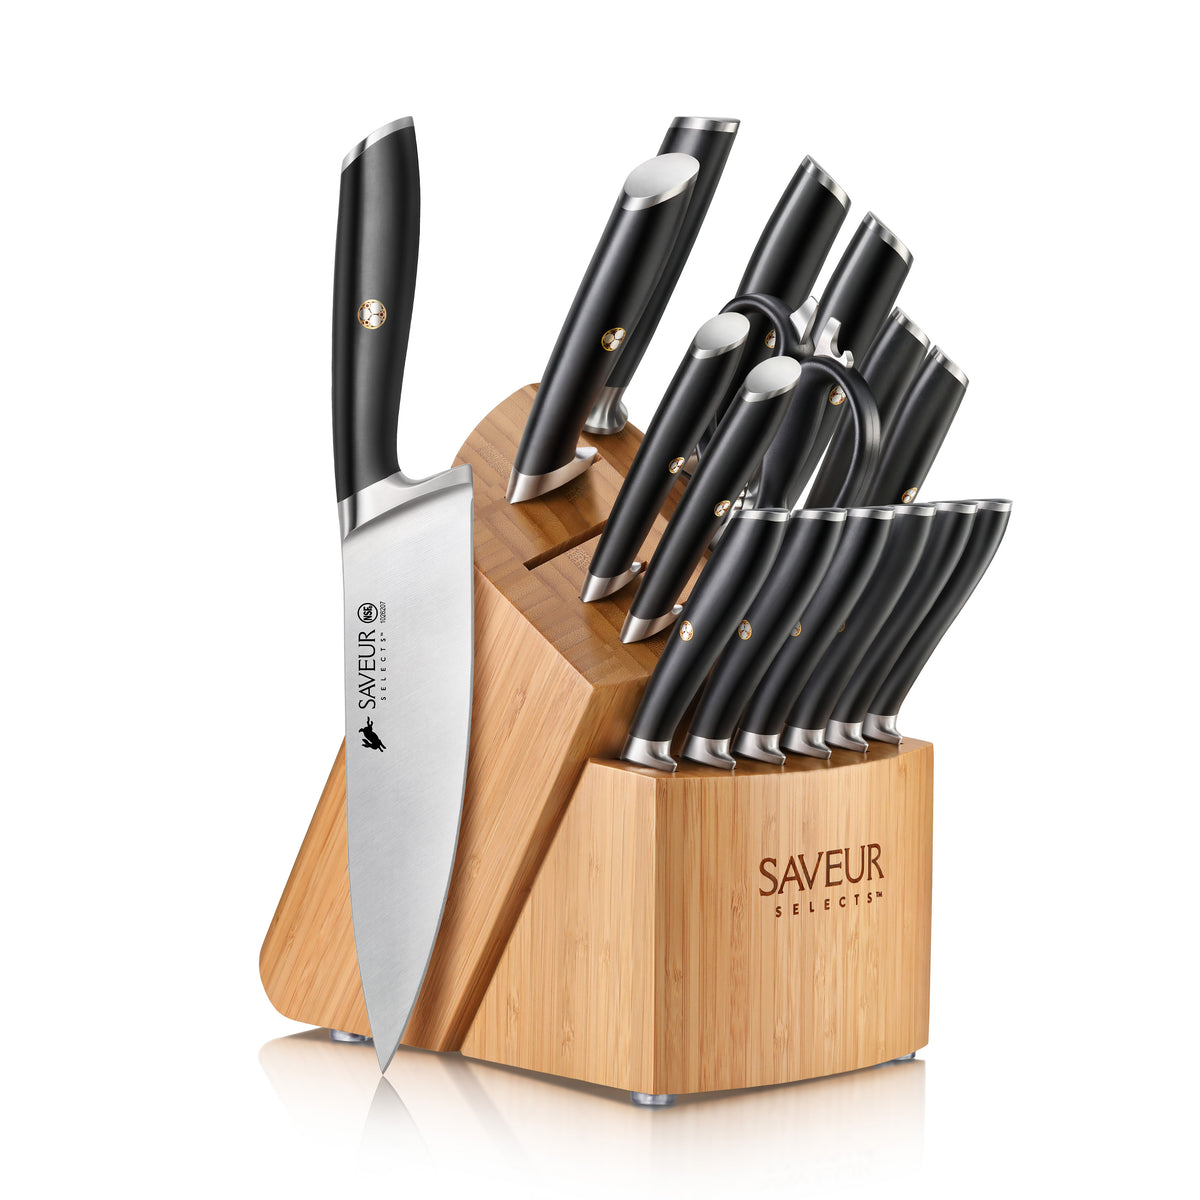 17 Pieces Professional Kitchen Knife Block Set